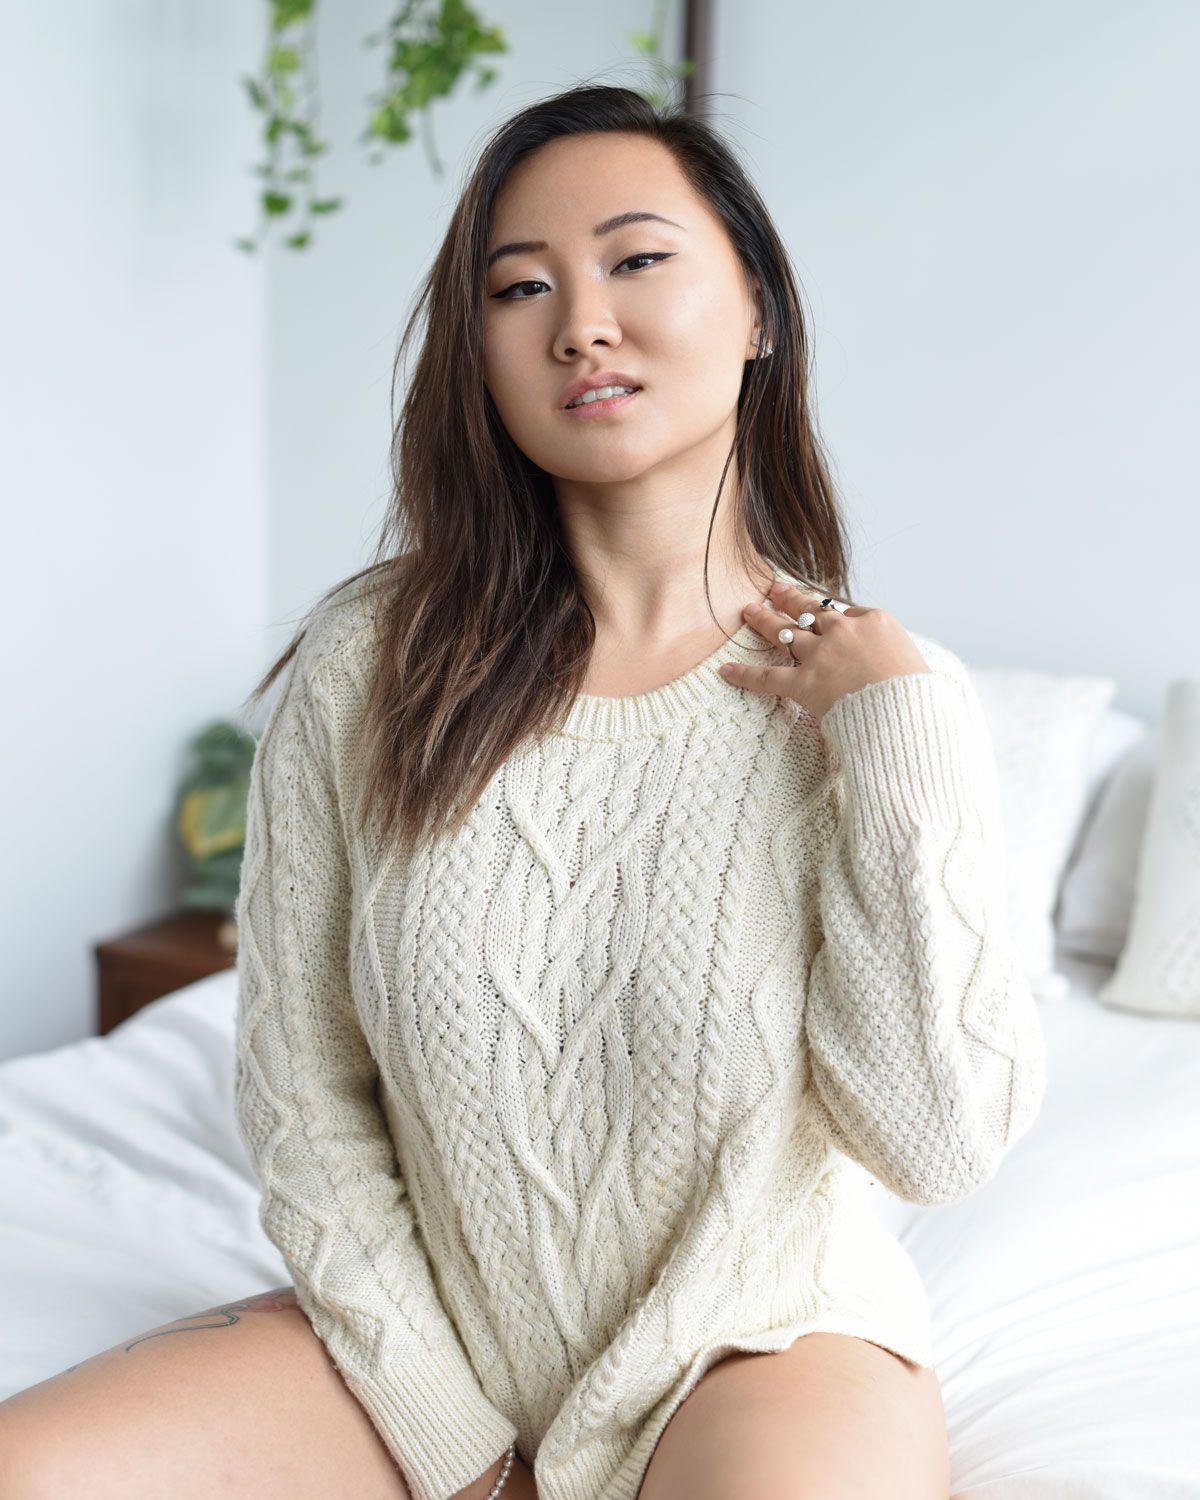 Asian Looking At Viewer Women Depth Of Field Sweater Brunette In Bed In Bedroom Vertical Shoulder Le 1200x1500